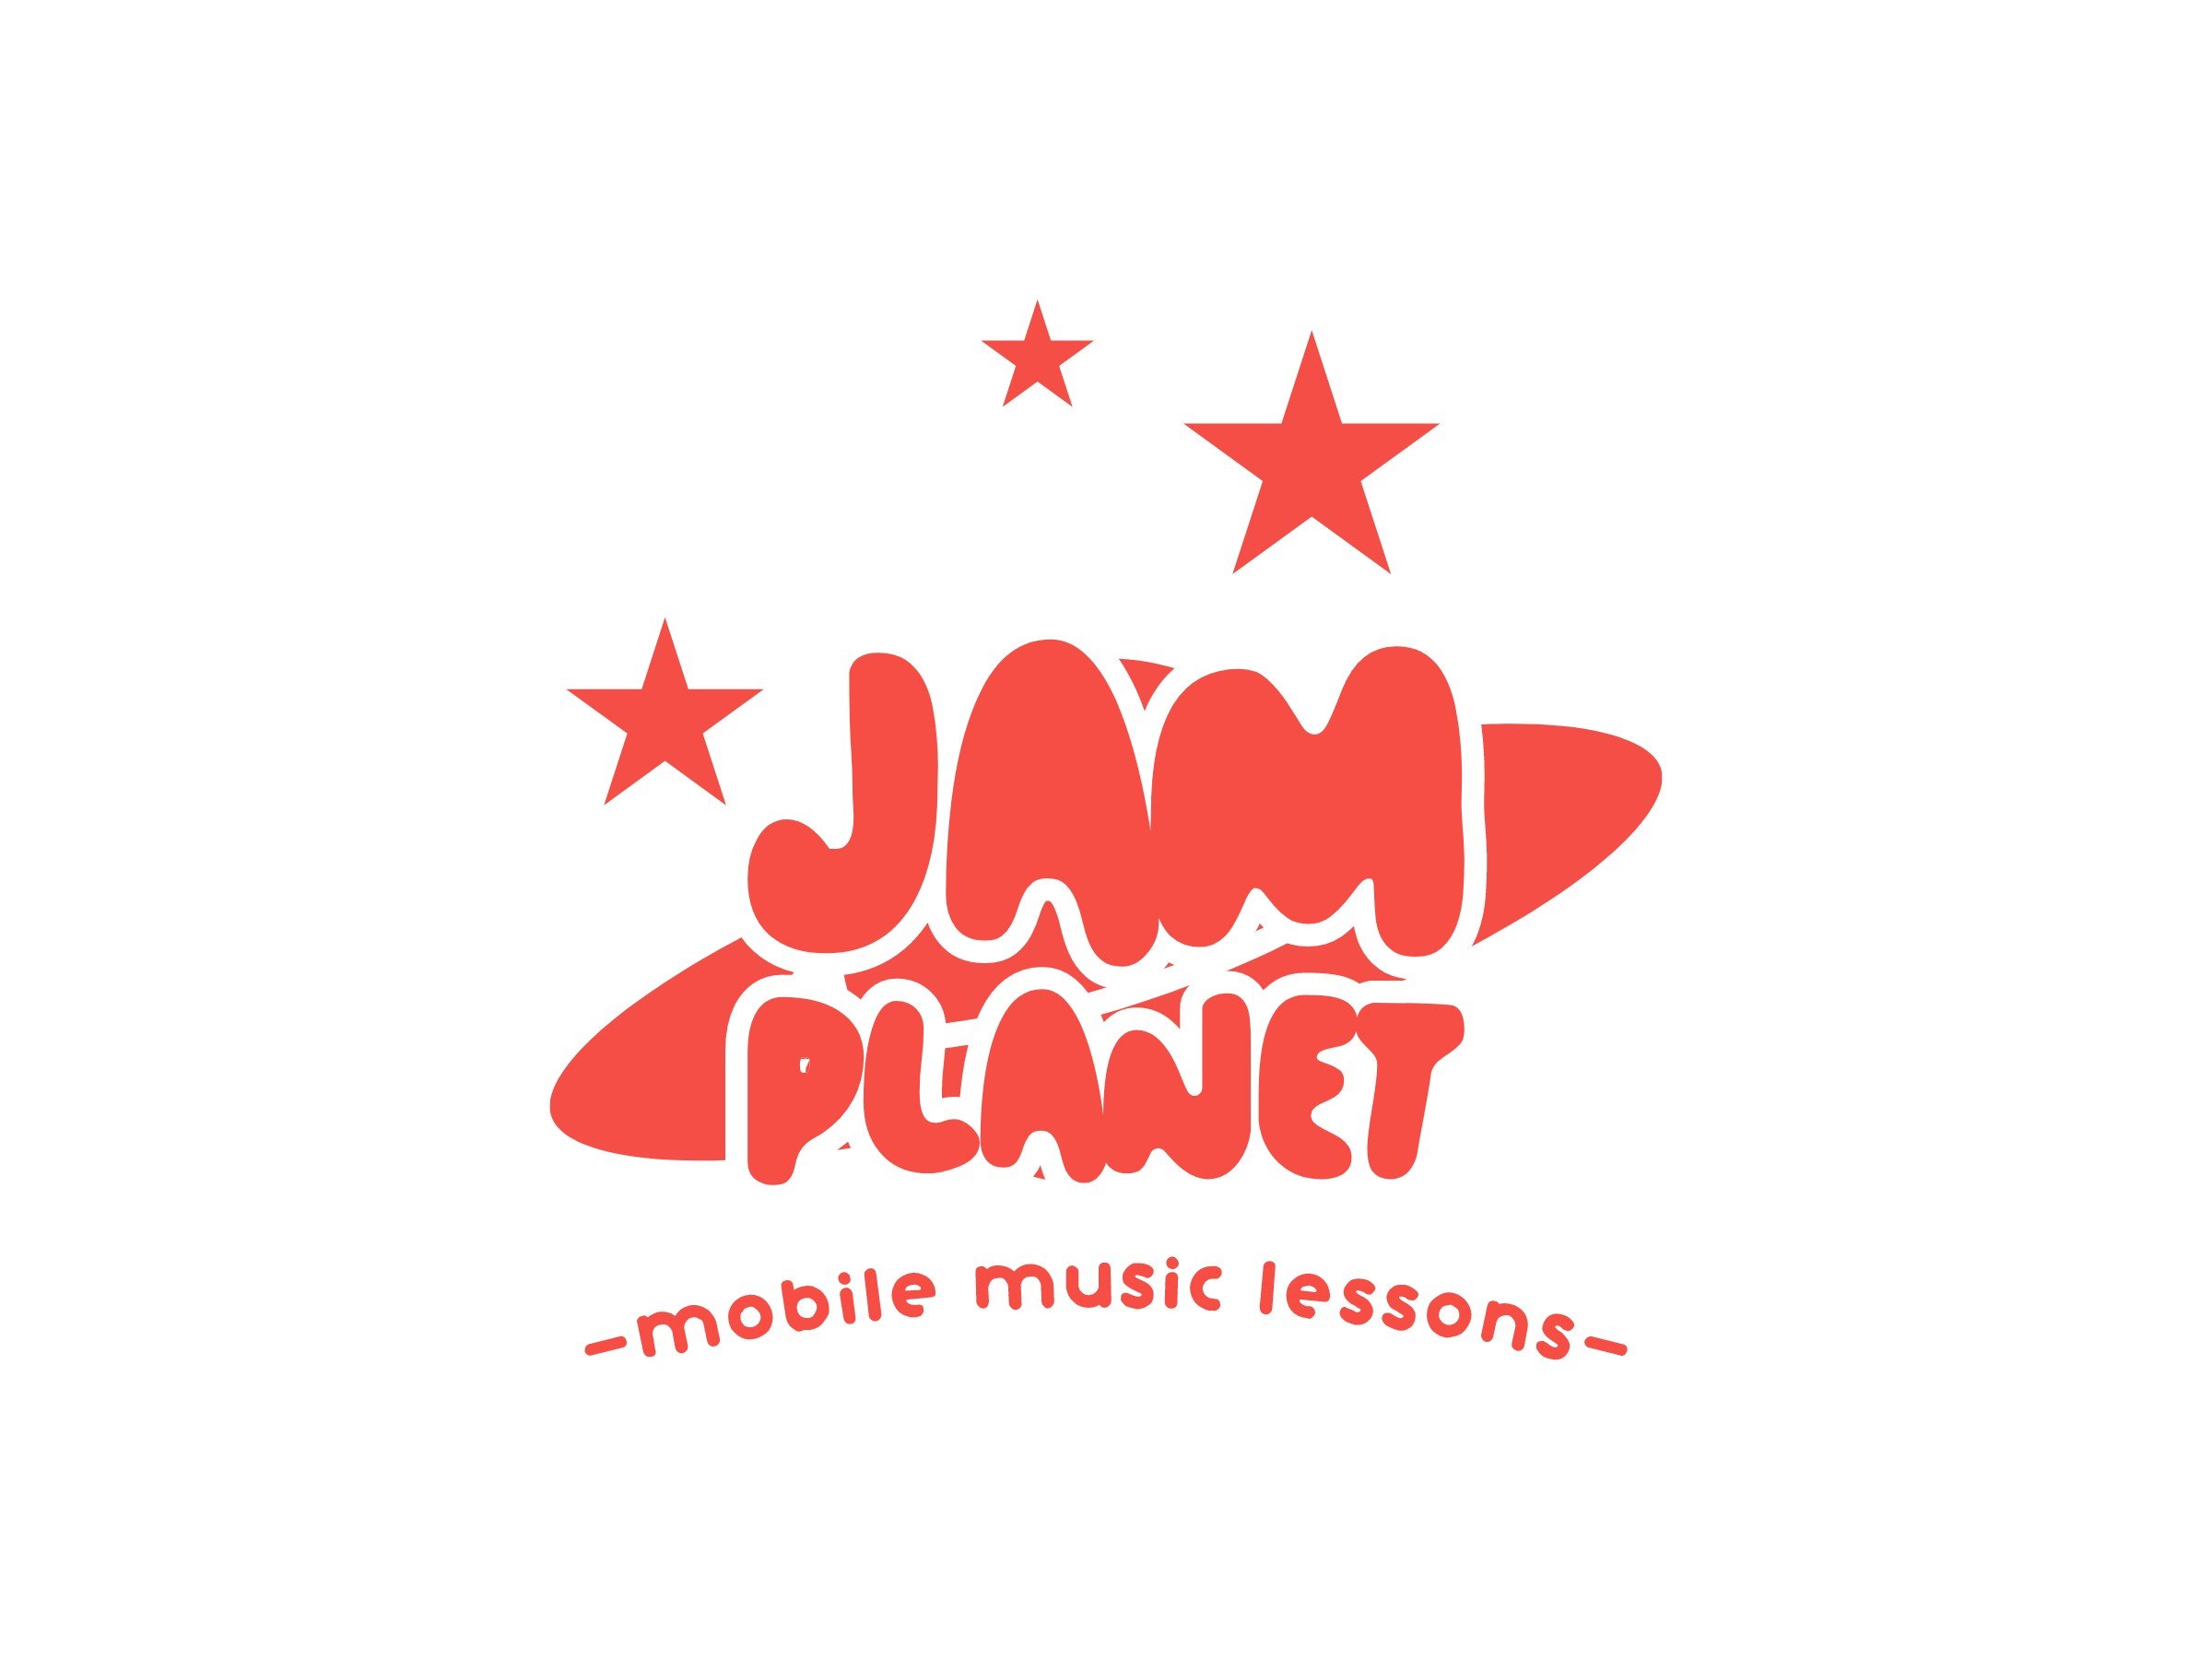 Jam Planet - mobile music lessons